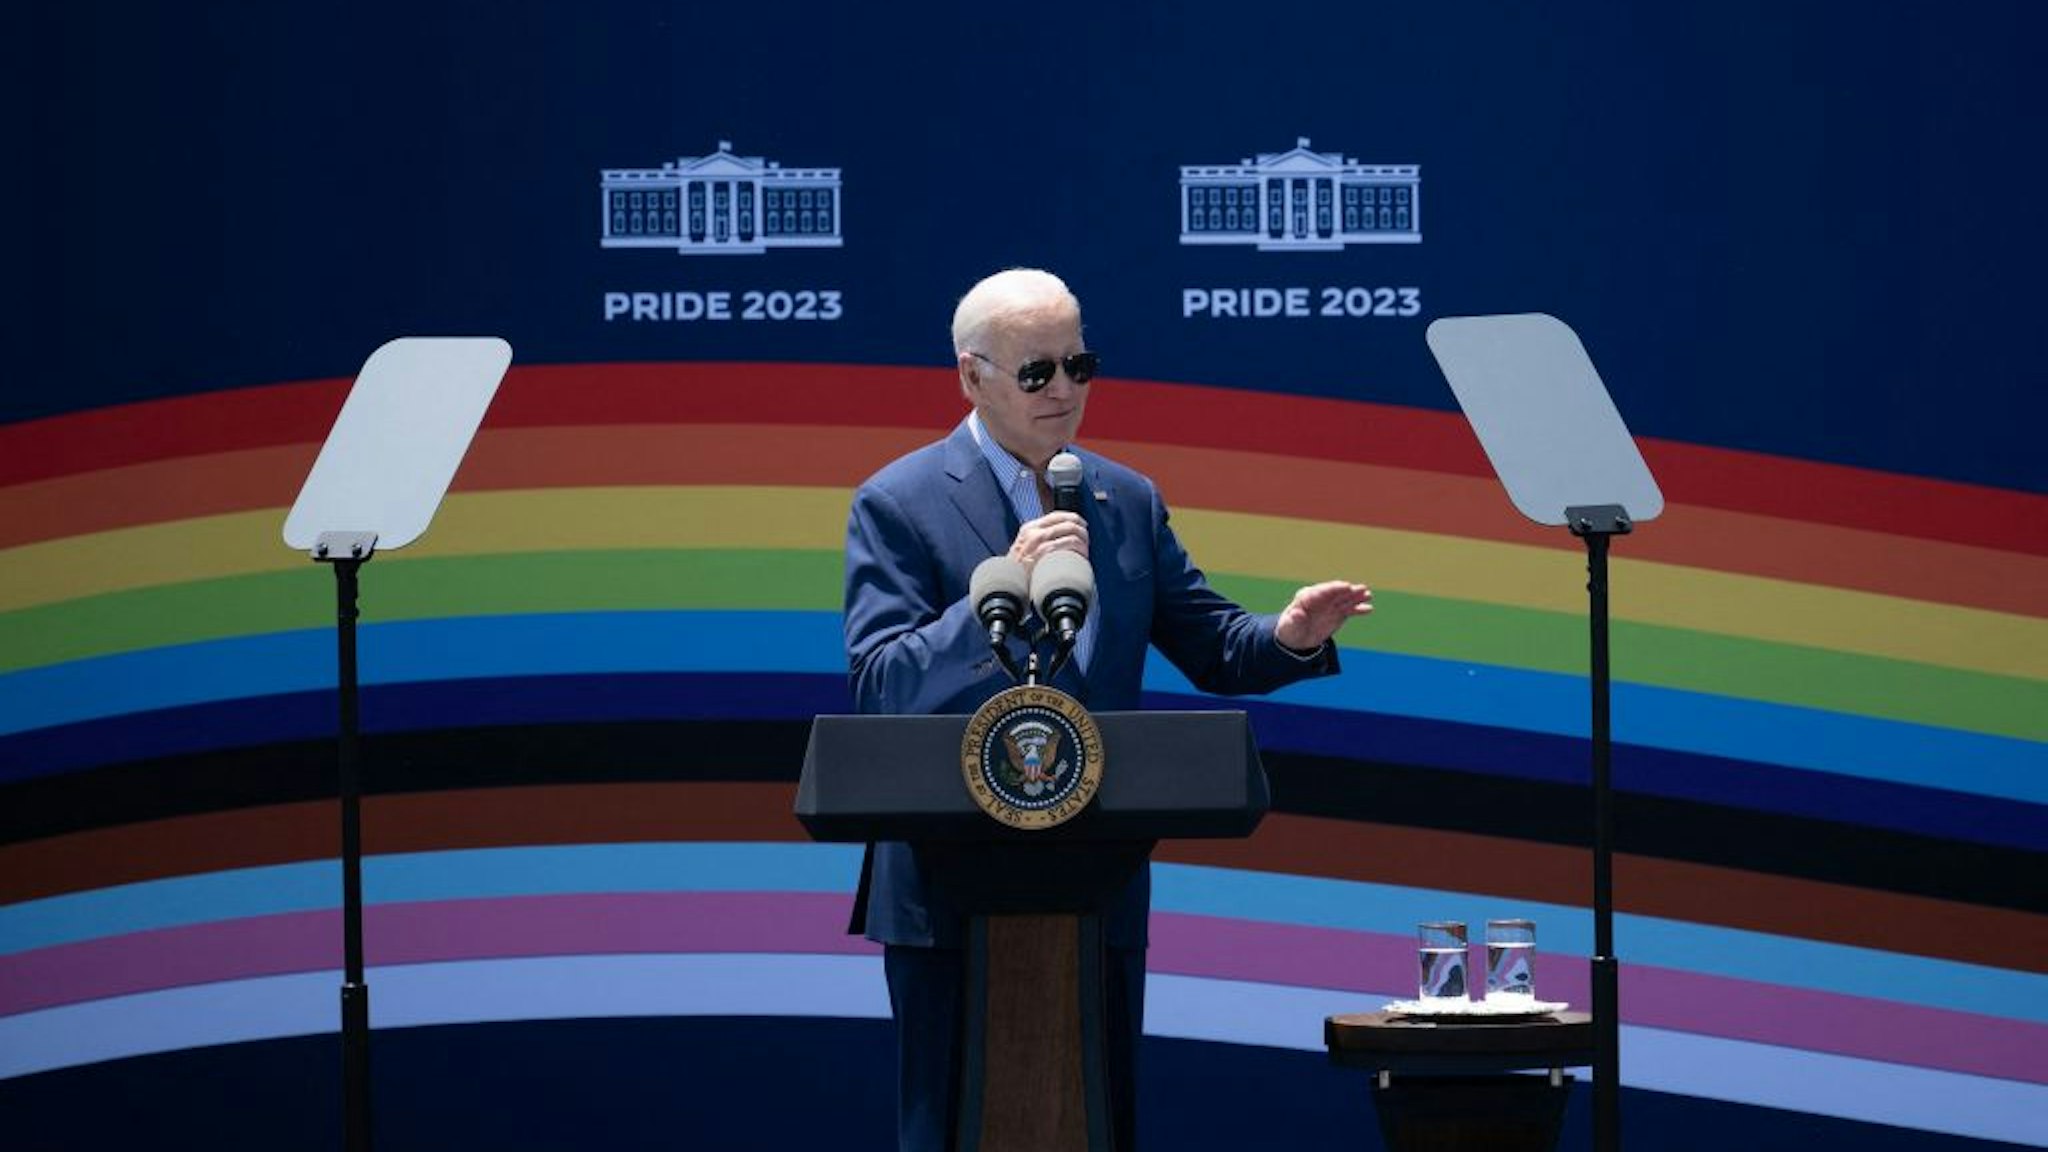 US President Joe Biden speaks during a Pride celebration on the South Lawn of the White House in Washington, DC, on June 10, 2023. (Photo by Brendan Smialowski / AFP)